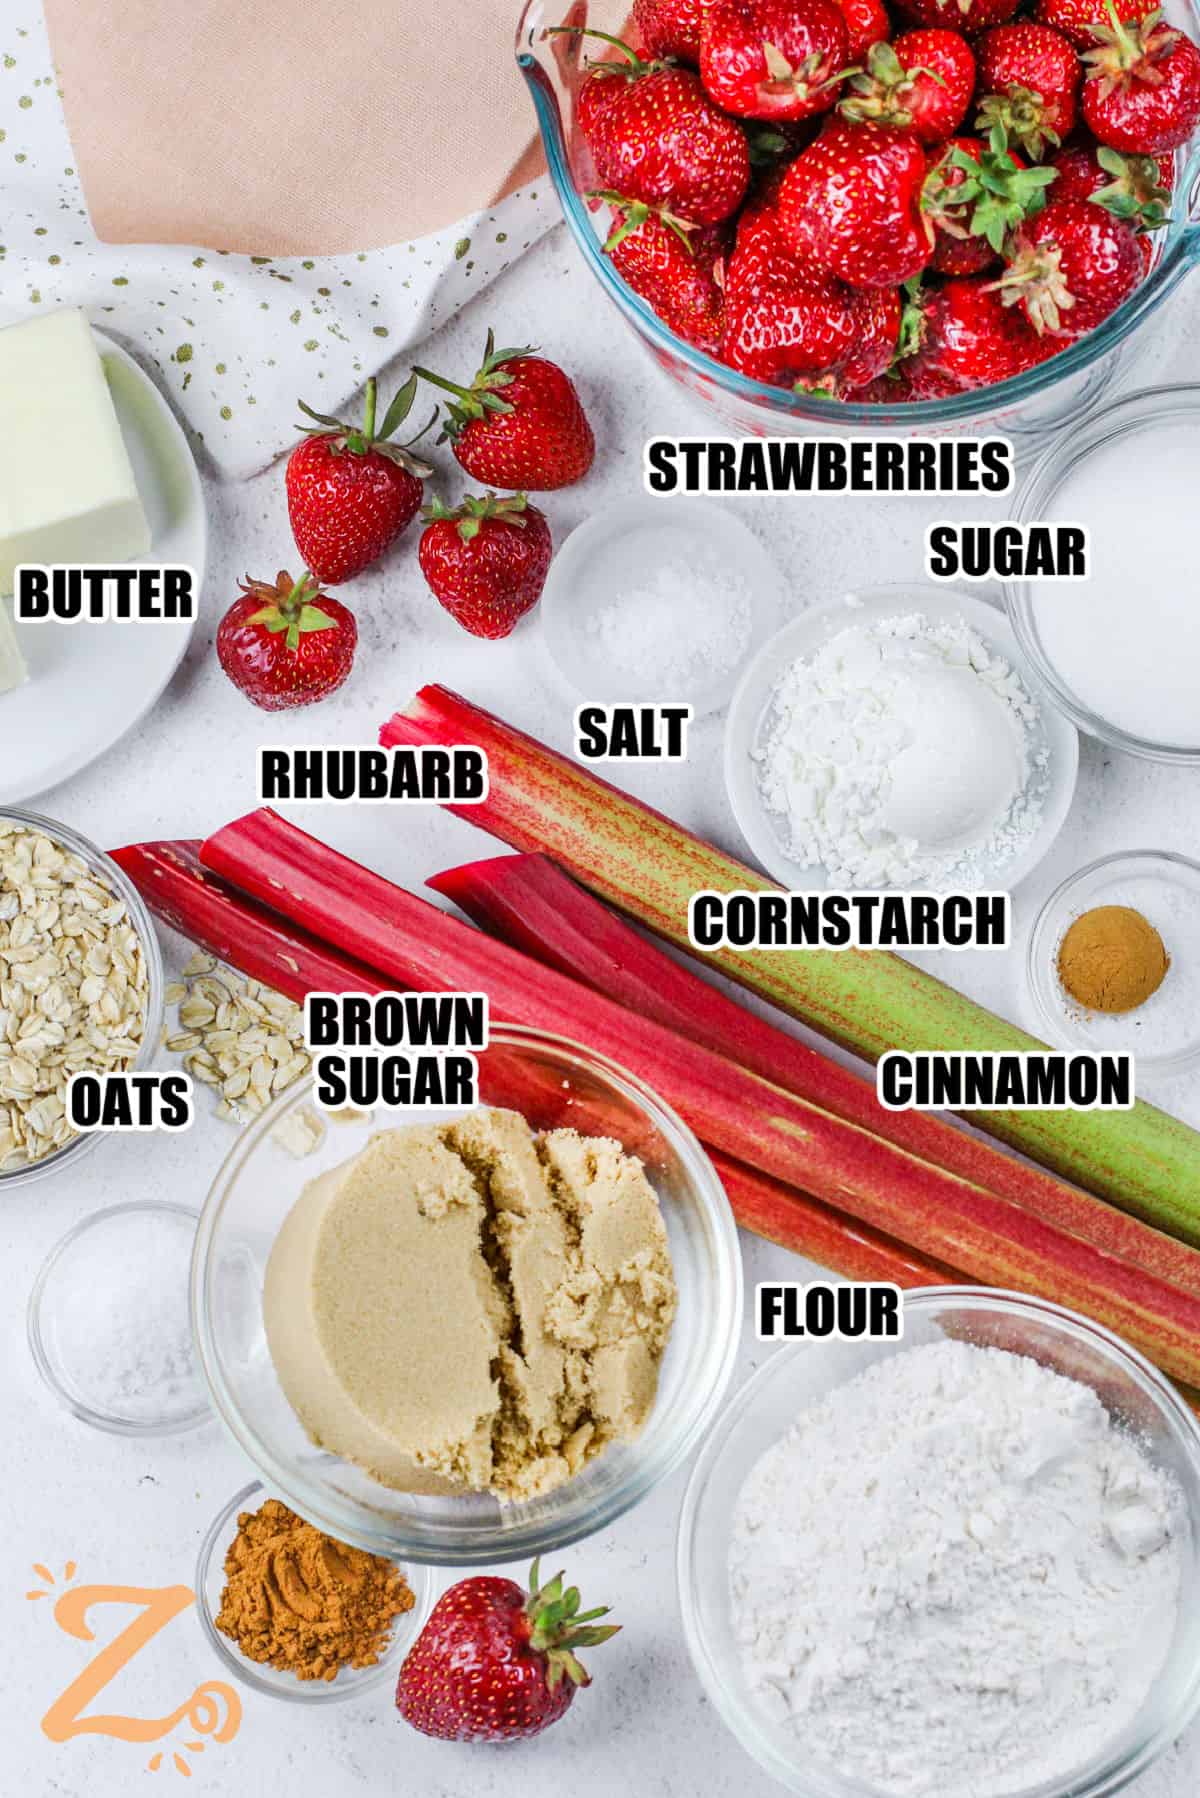 strawberries , sugar , salt , cornstarch , cinnamon , flour, brown sugar , oats , butter and rhubarb with labels to make Strawberry Rhubarb Crisp